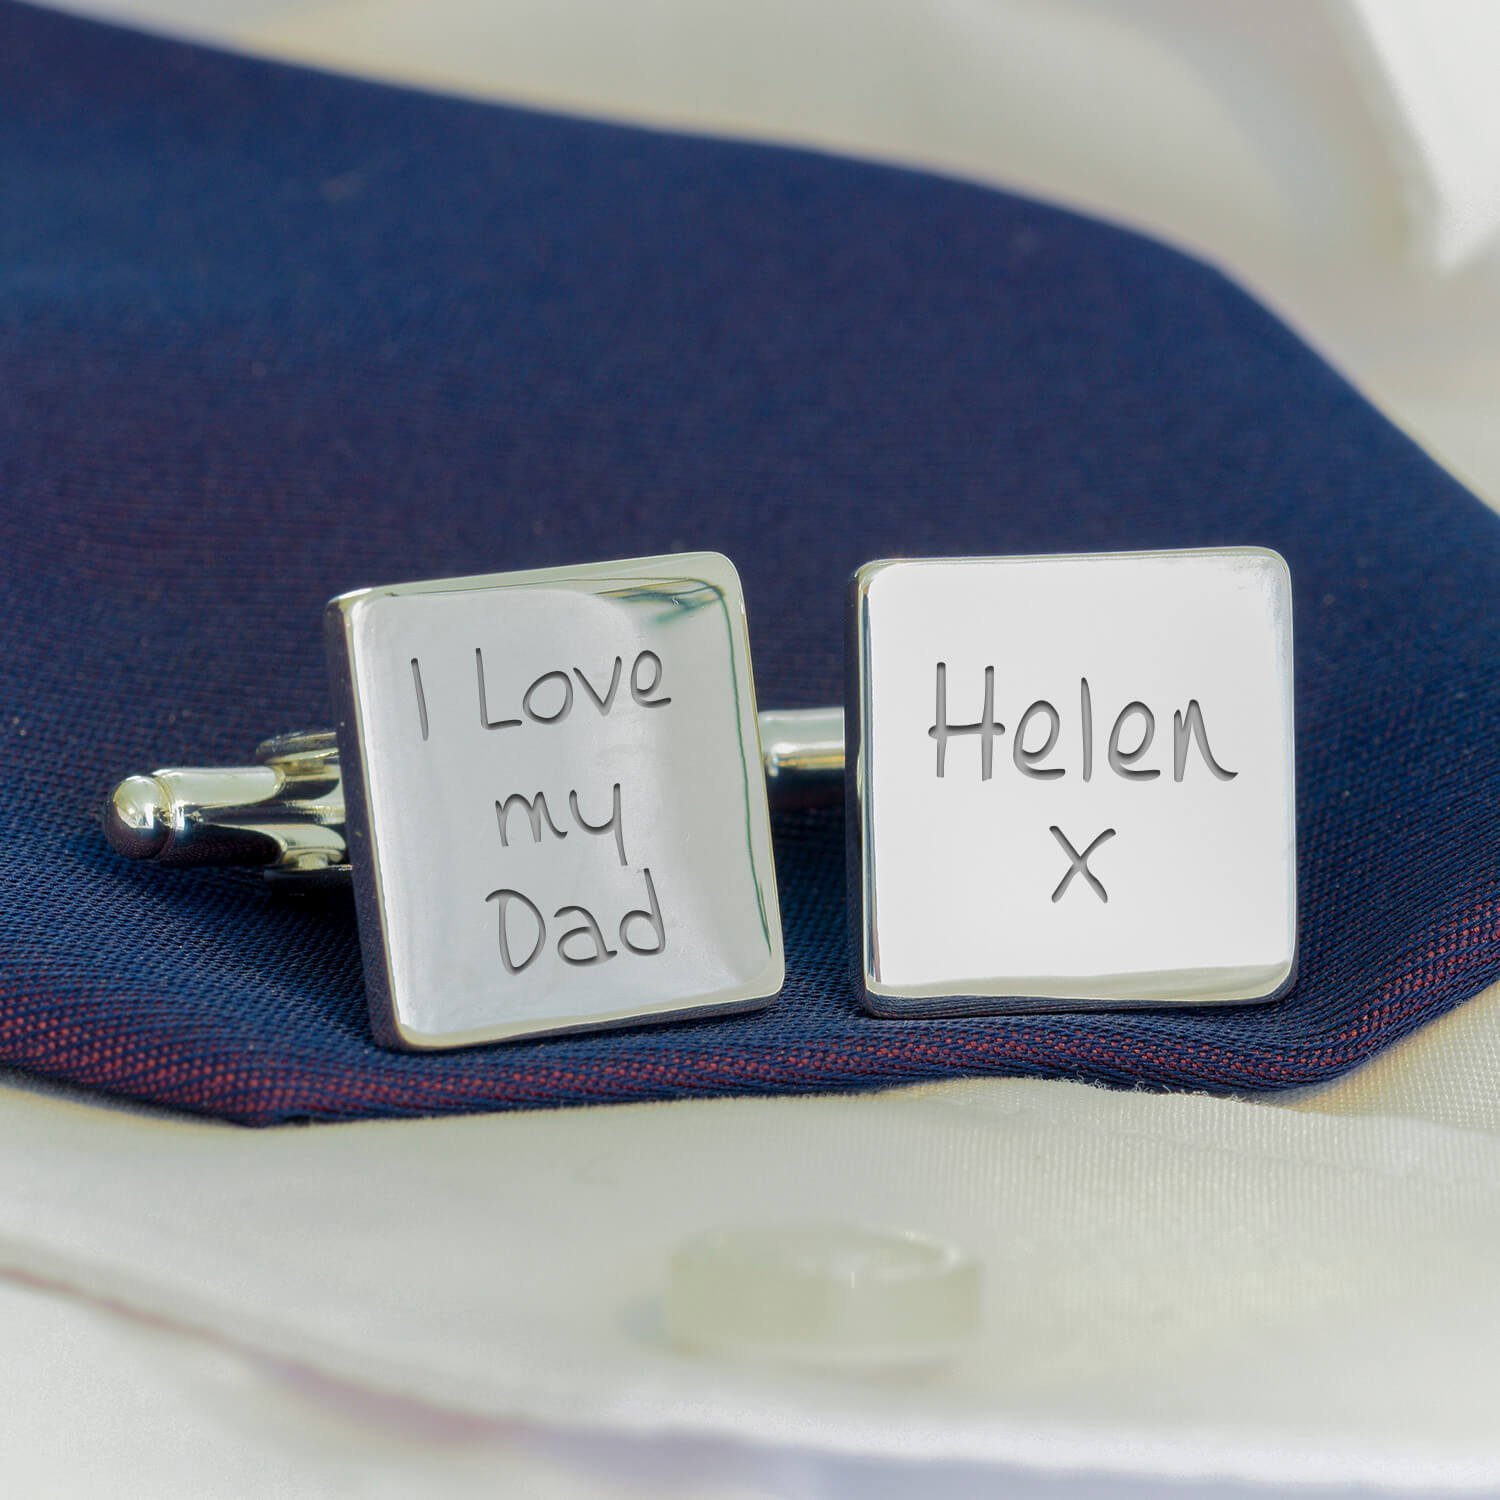 Personalised Cufflinks – I Love My Dad